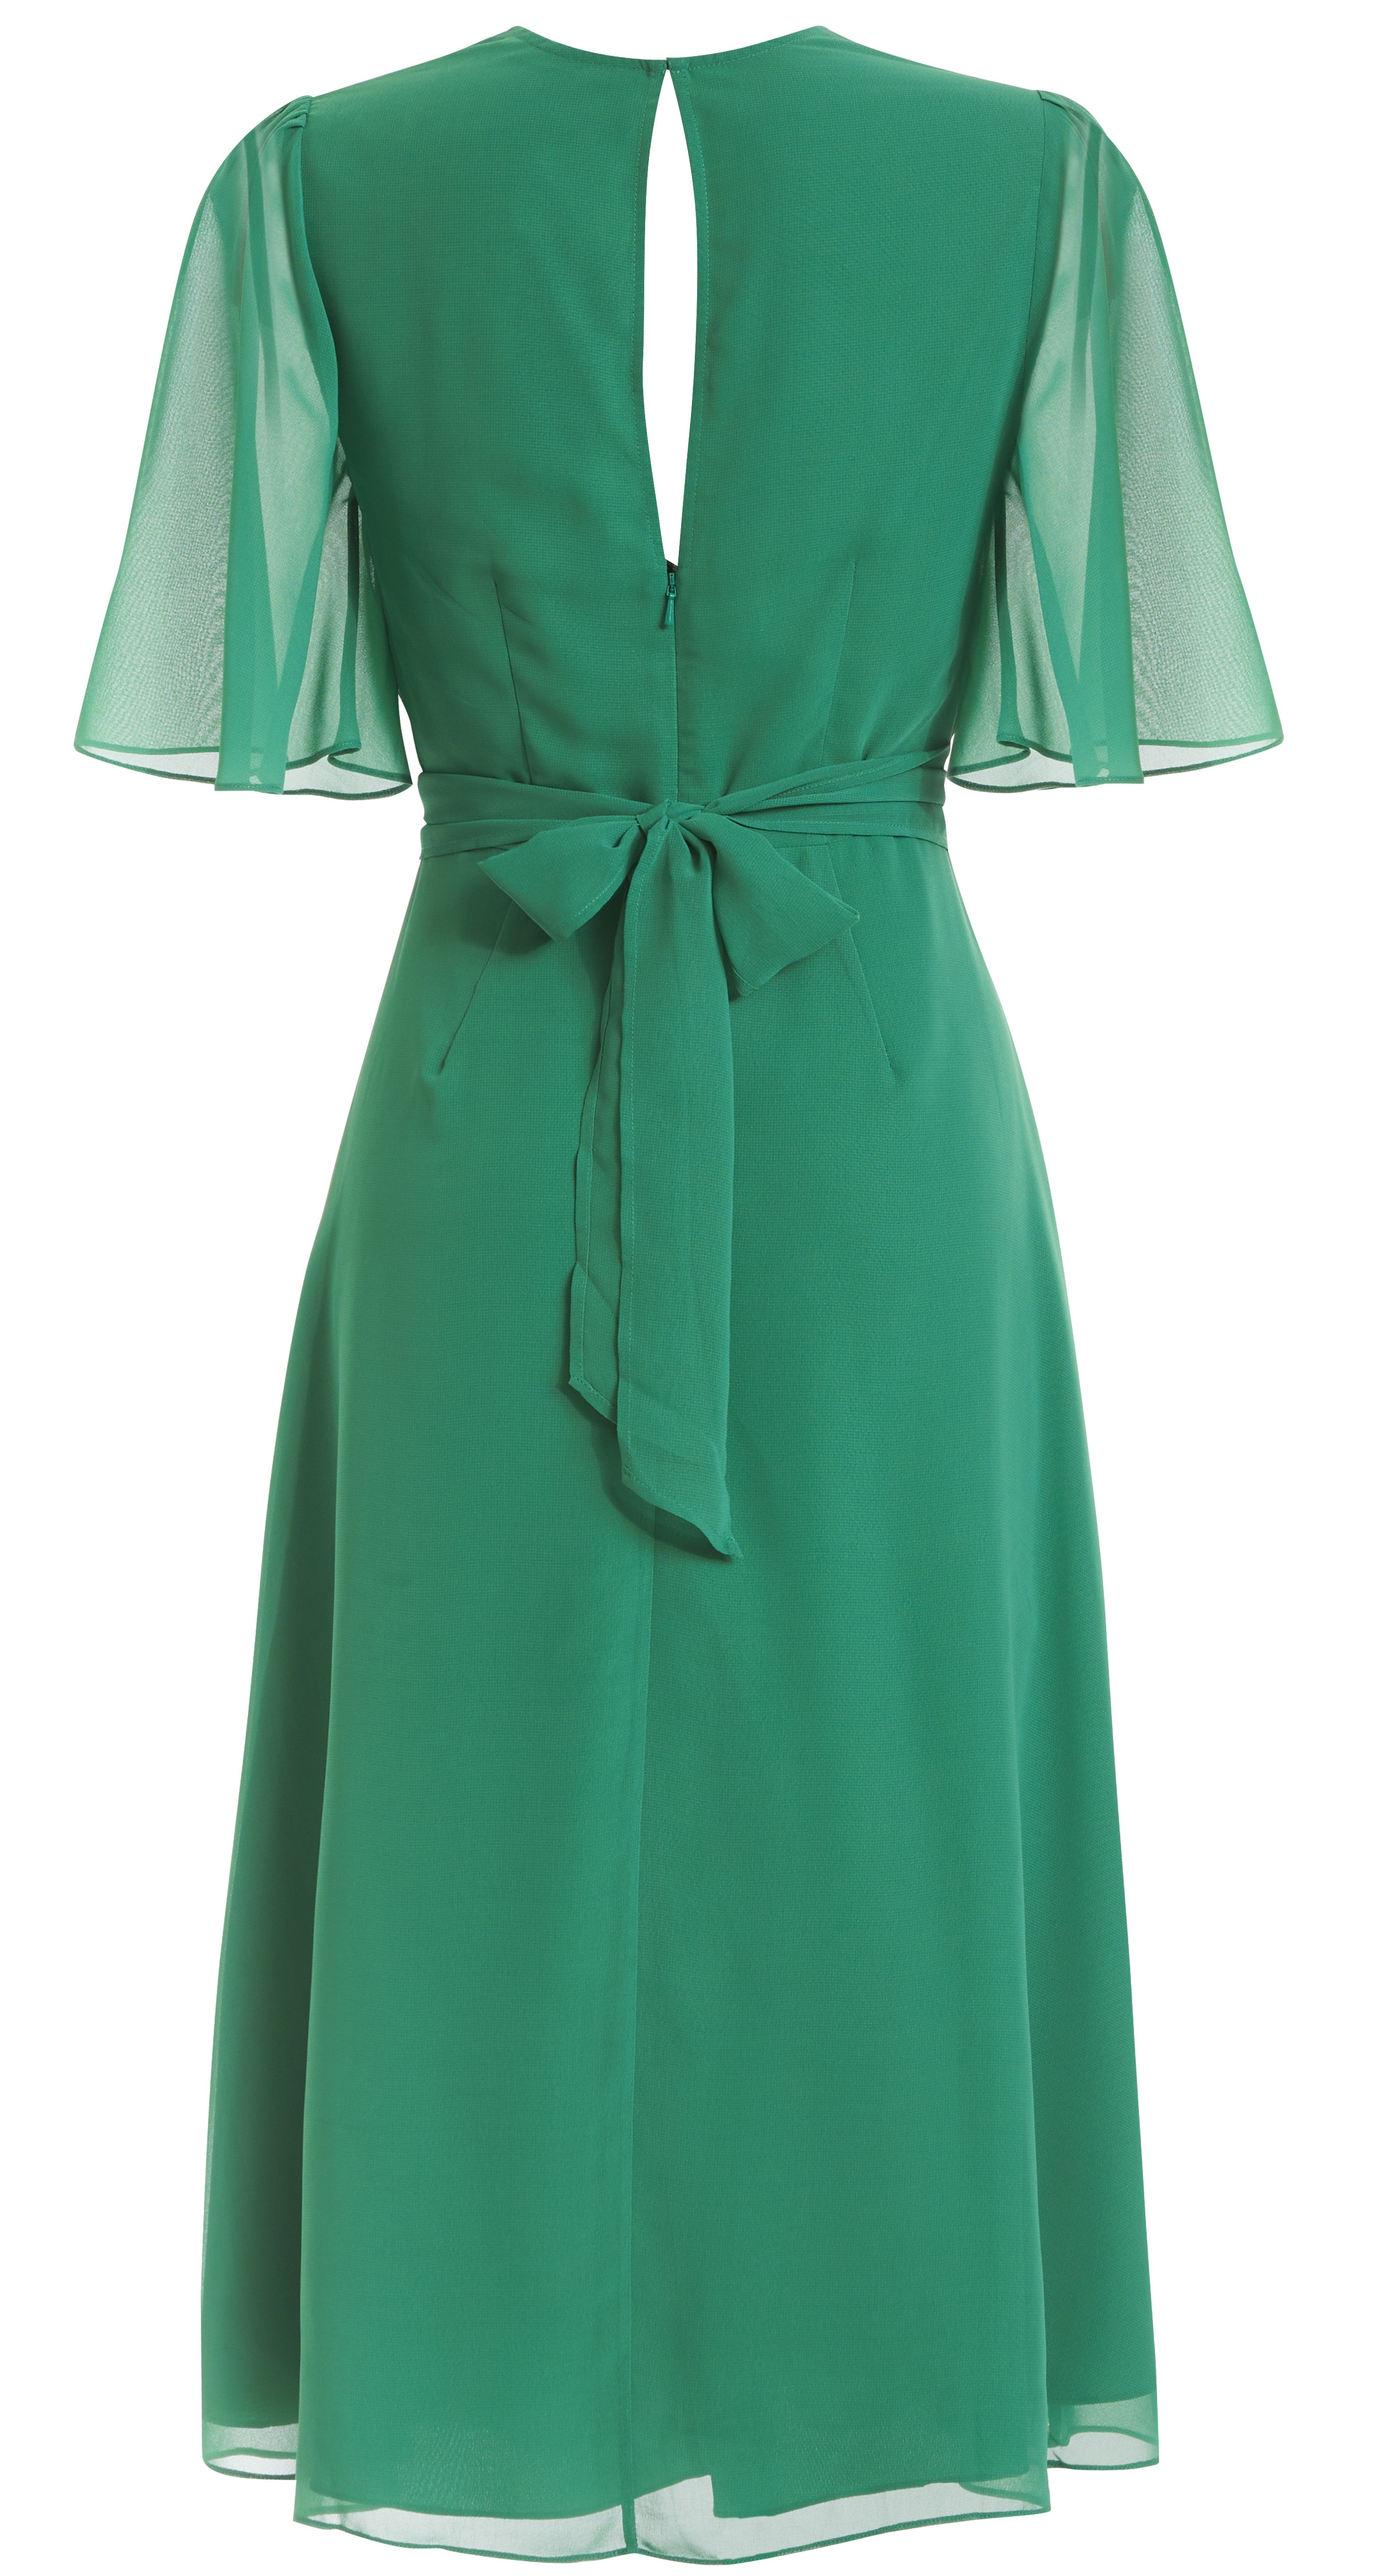 back of the green midi dress